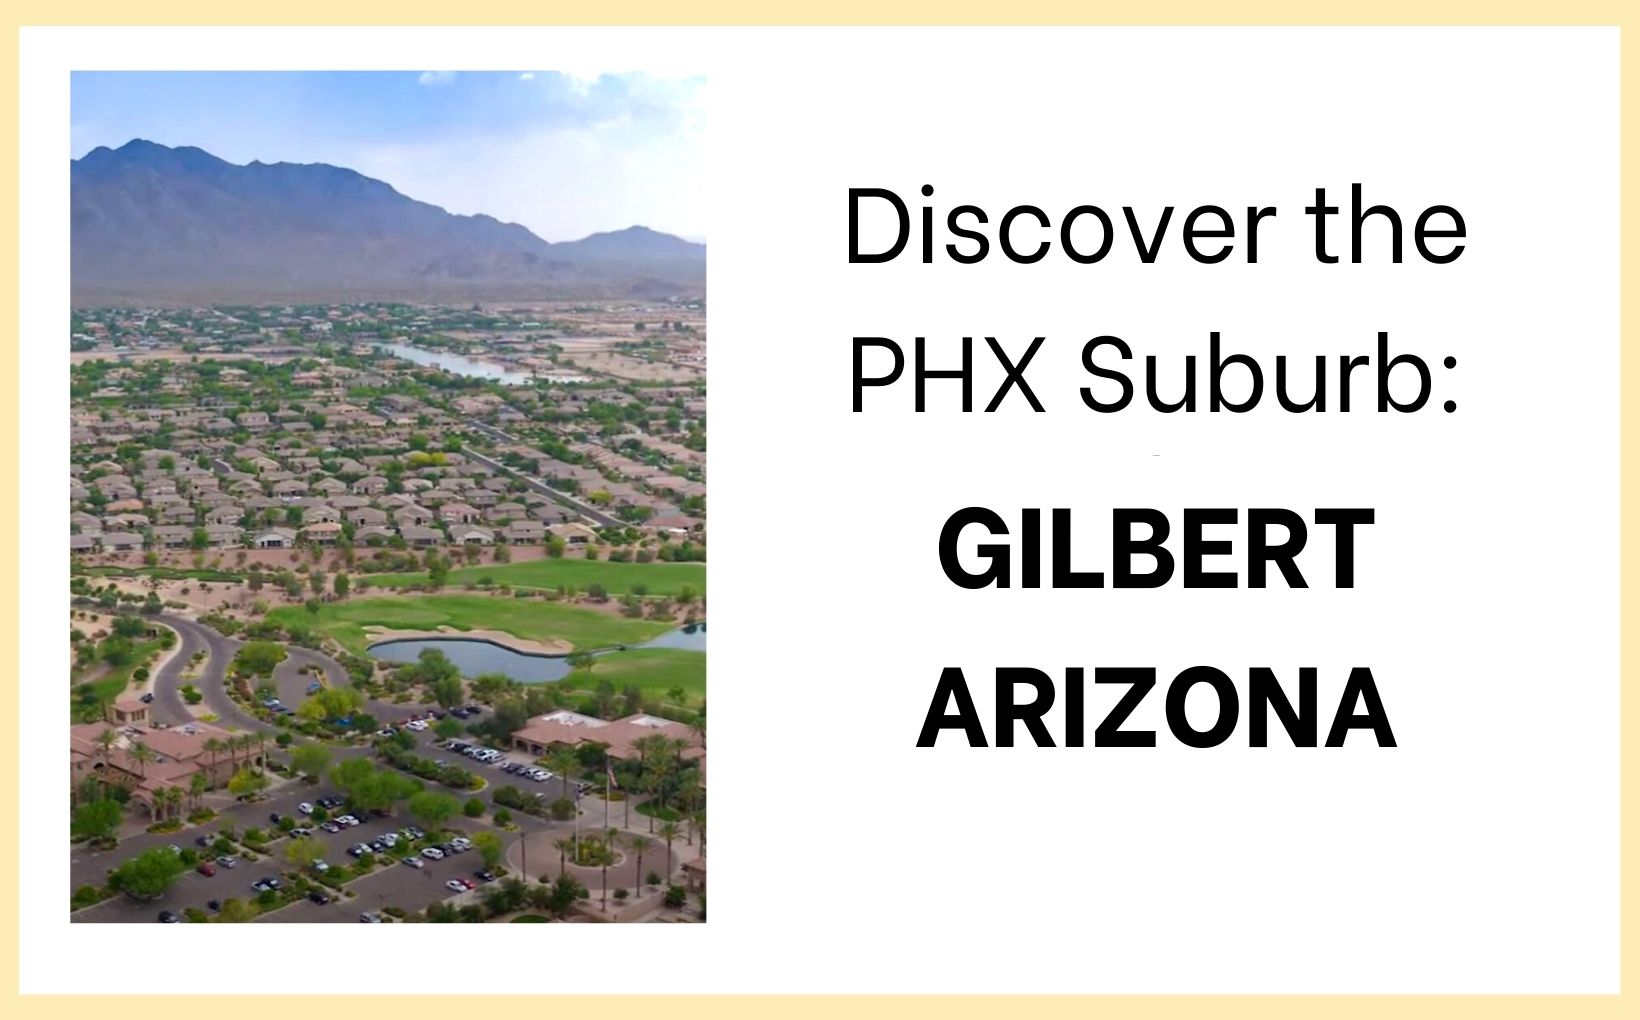 Gilbert Arizona suburb of Phoenix feature image